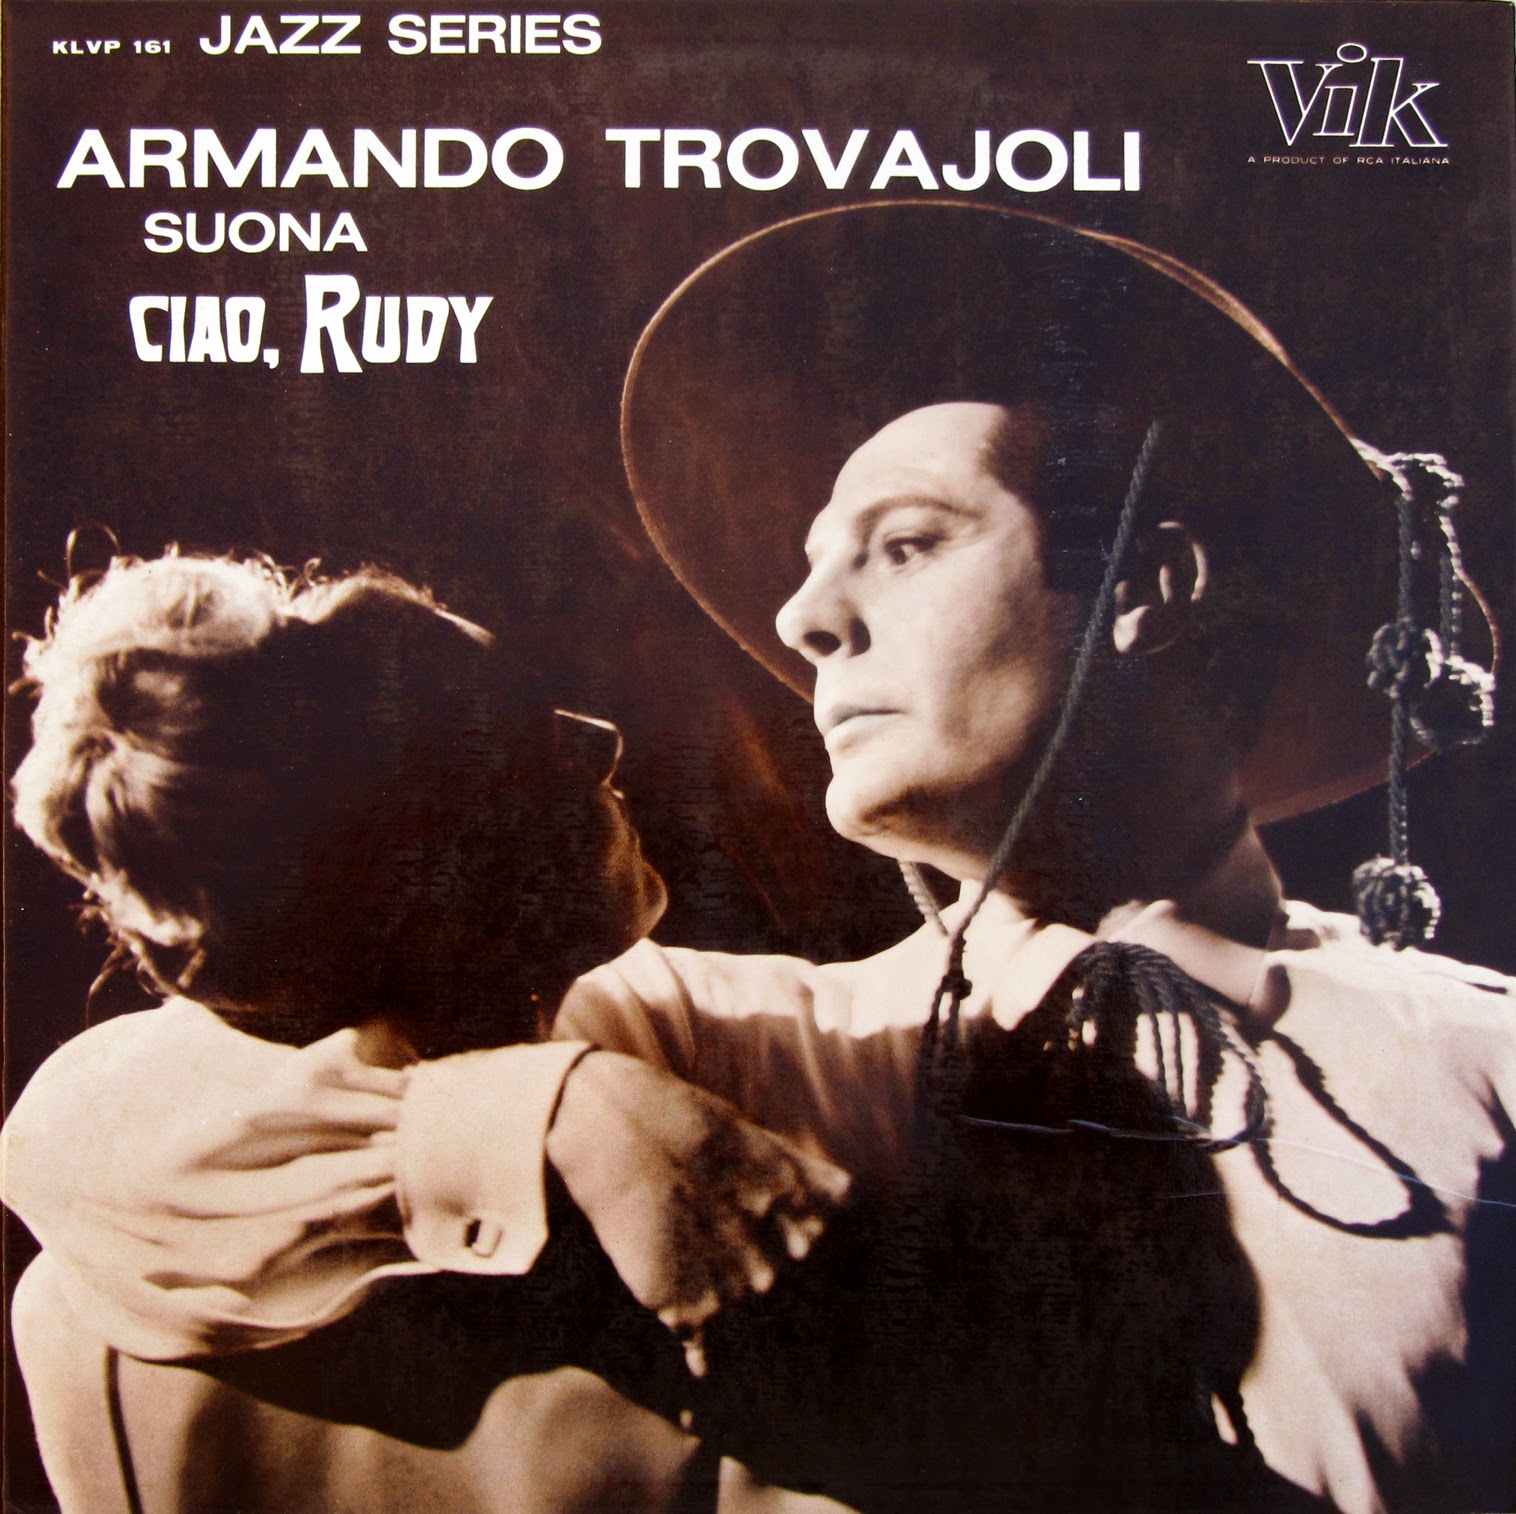 ARMANDO TROVAJOLI Ciao, Rudy reviews